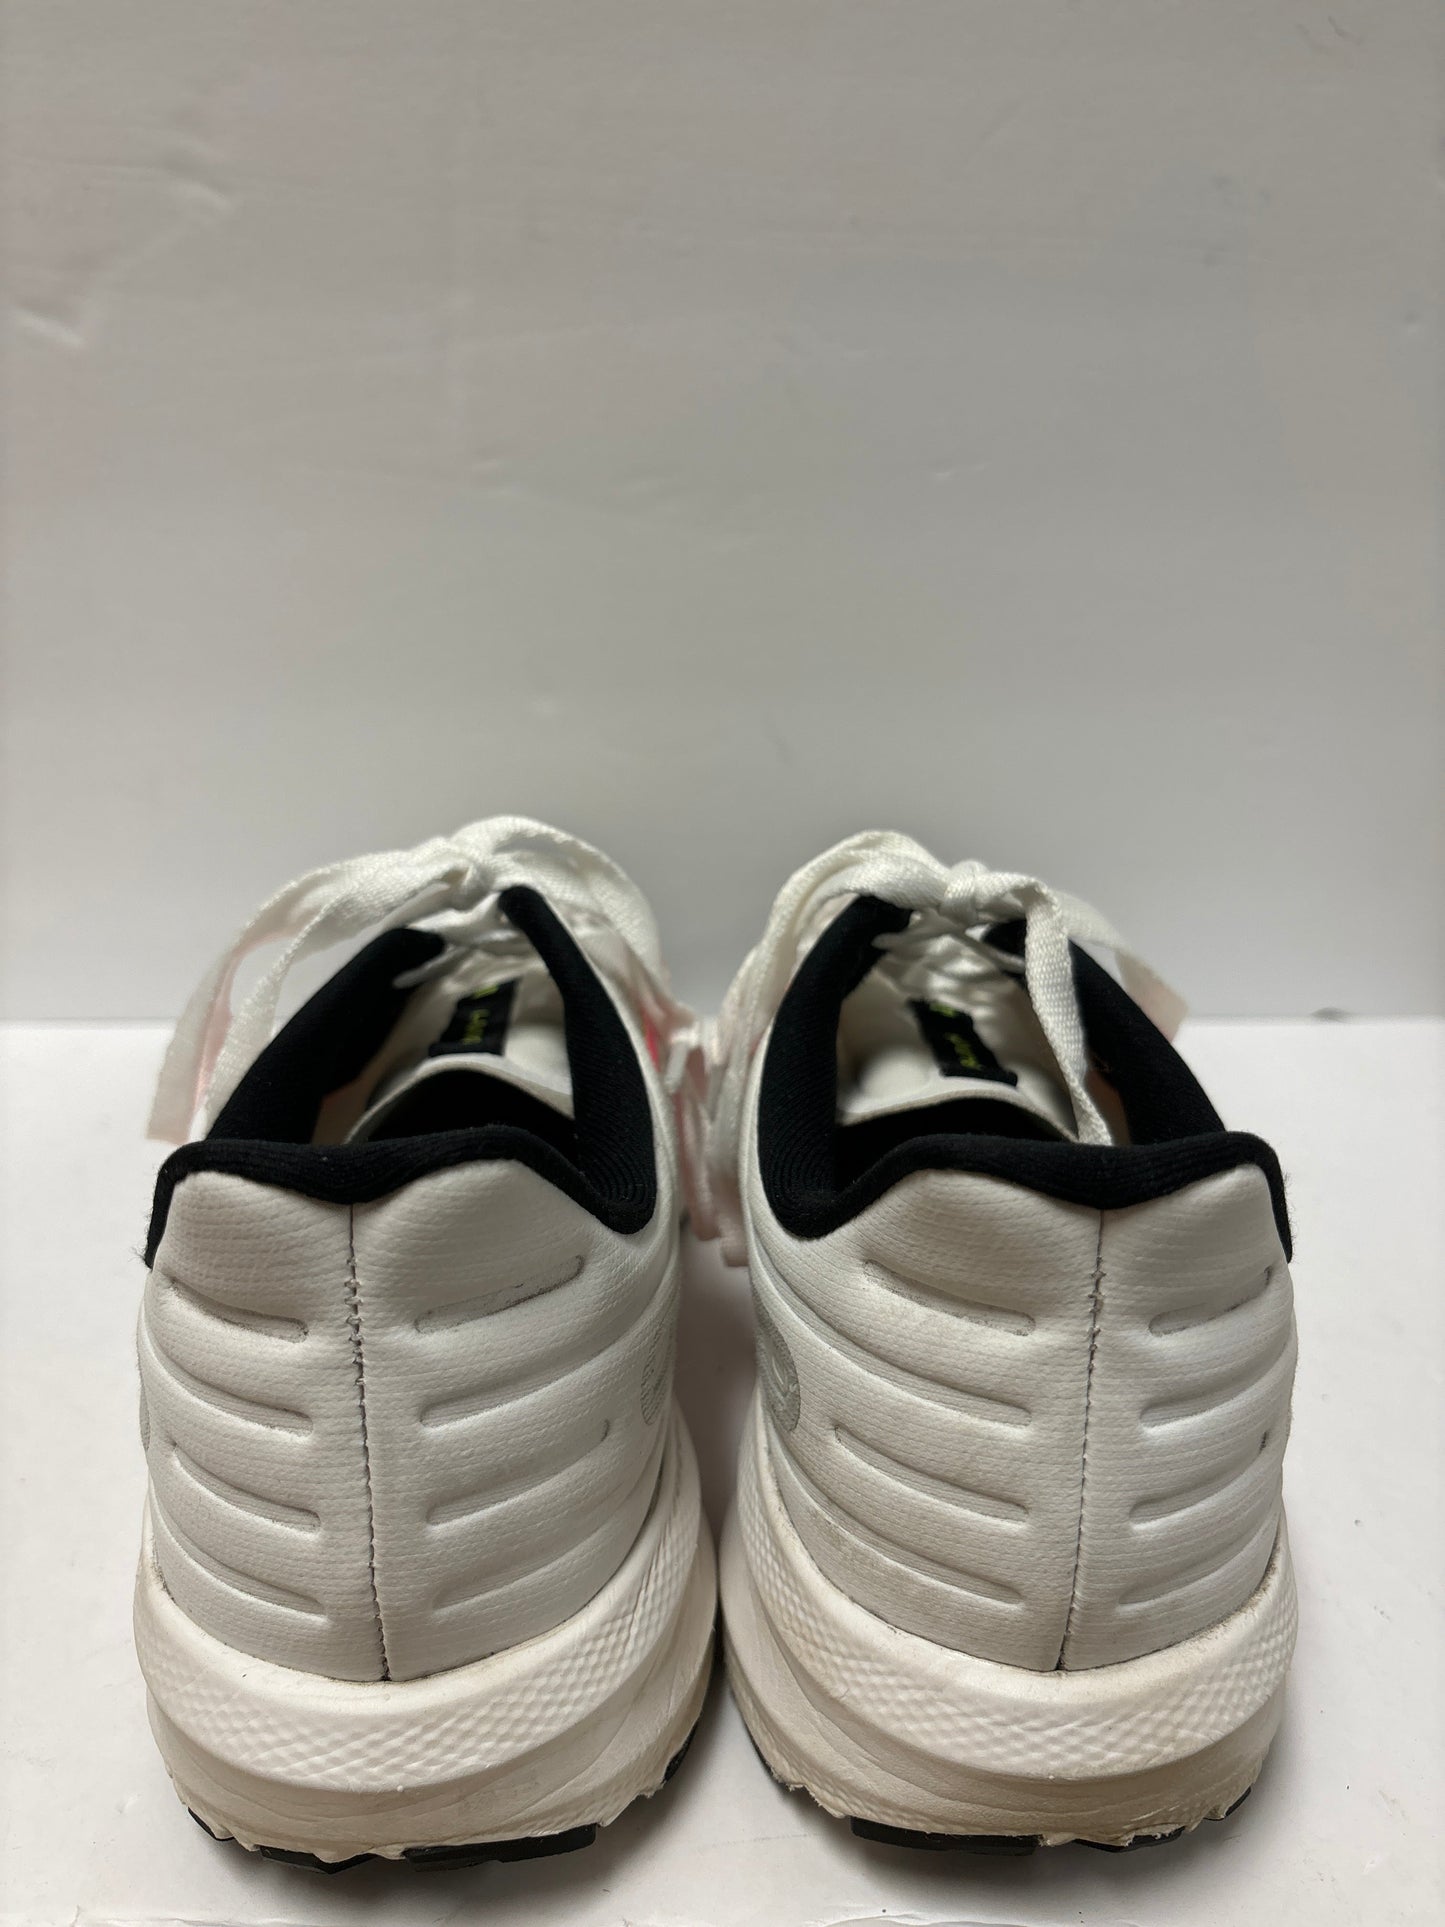 White Shoes Athletic Brooks, Size 11